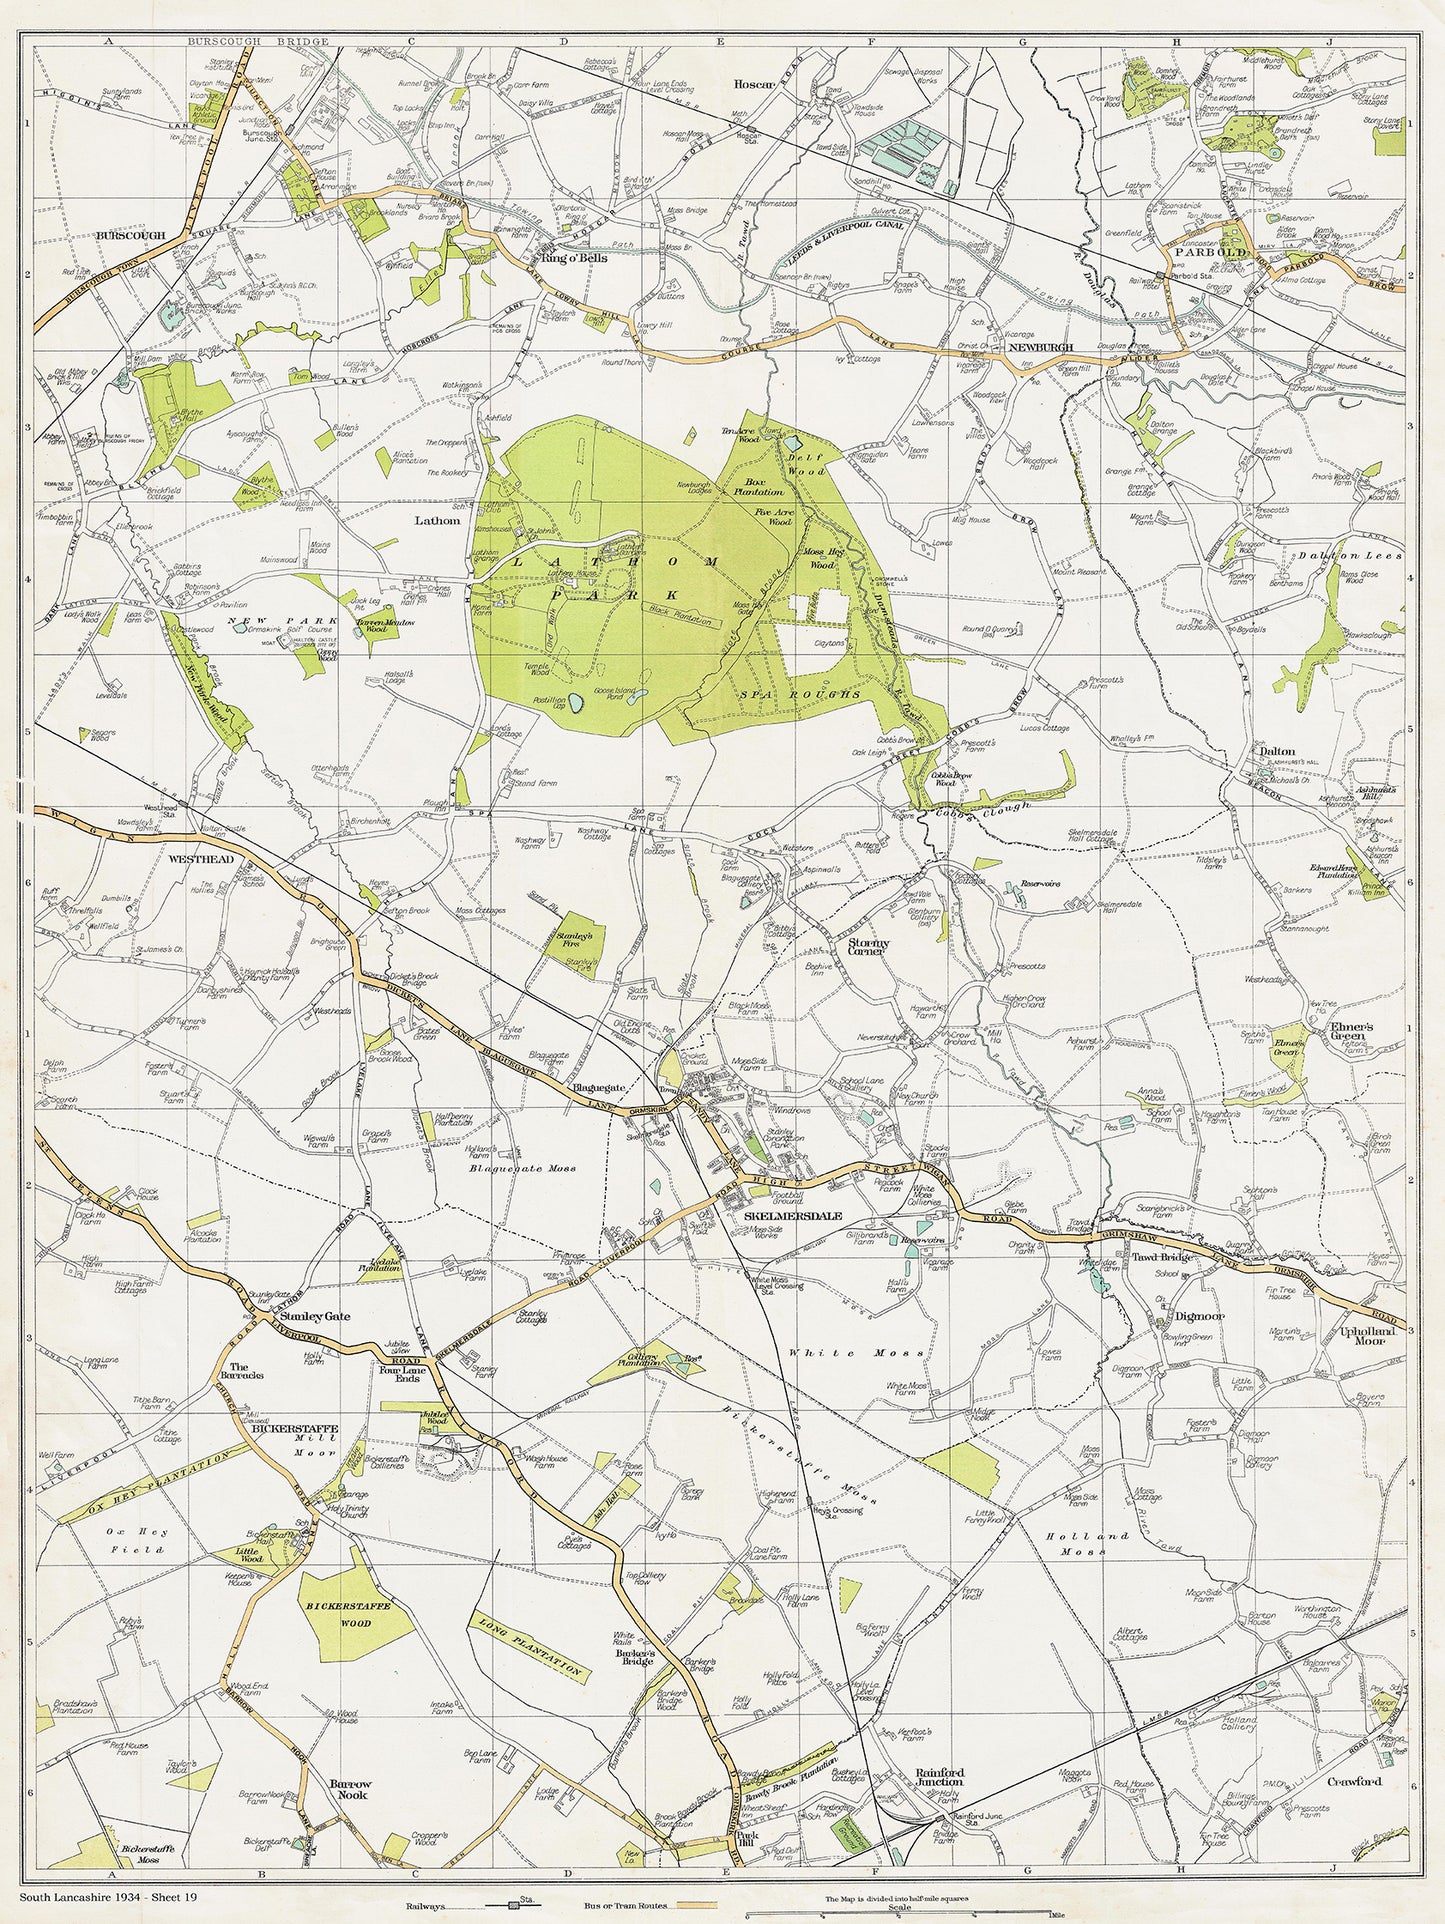 Lancashire (south) 1934 Series - Birscough, Newburgh, Parbold, Lathom Park, Westhead, Skelmersdale, Bickerstaff, Rainford Junction area - sheet 19